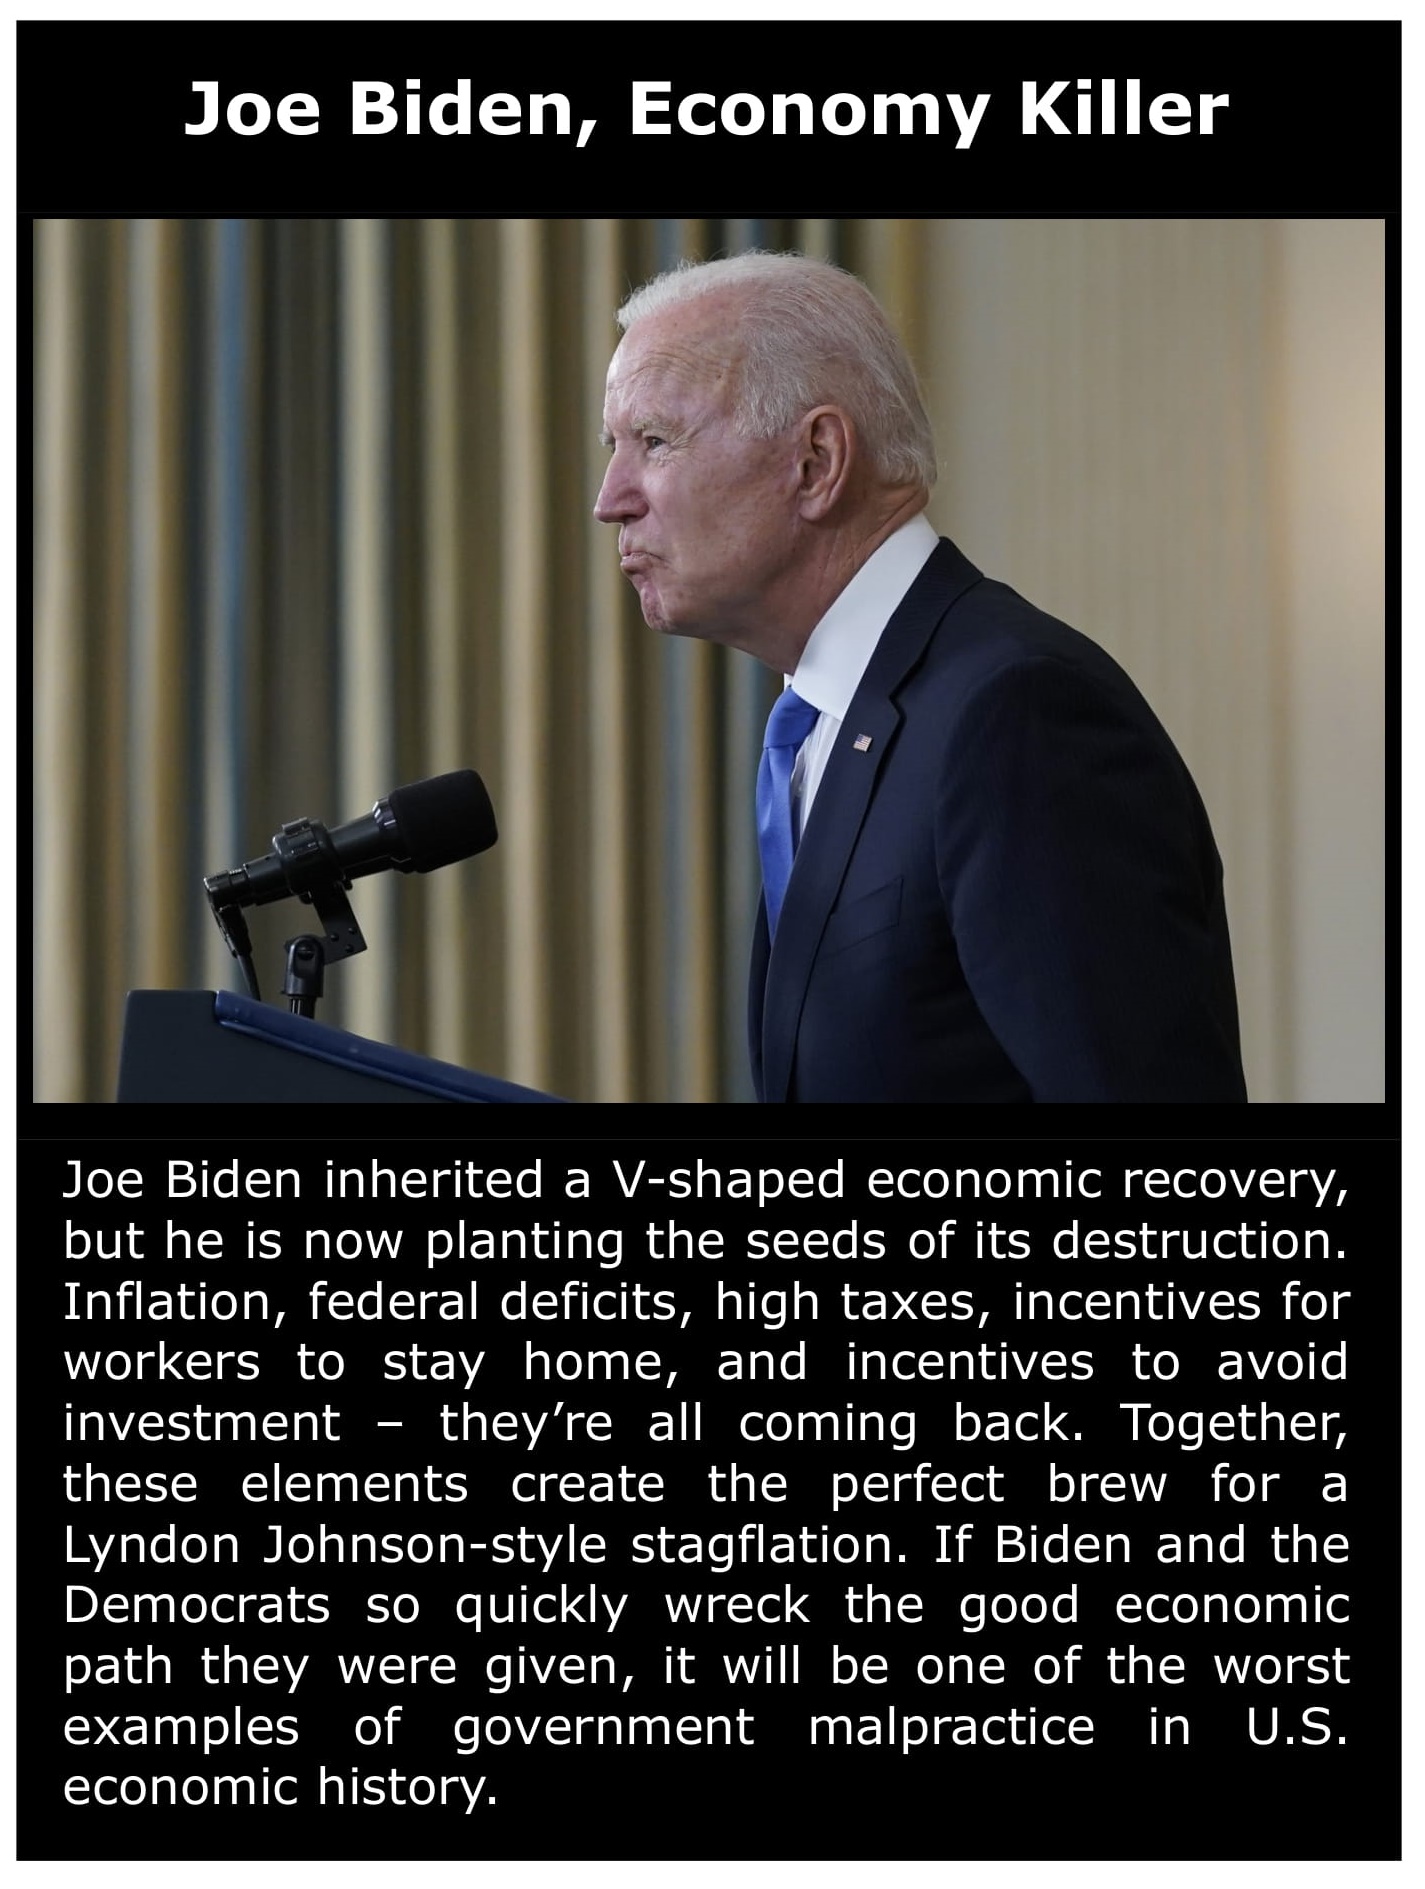 Joe Biden - The Economy Killer